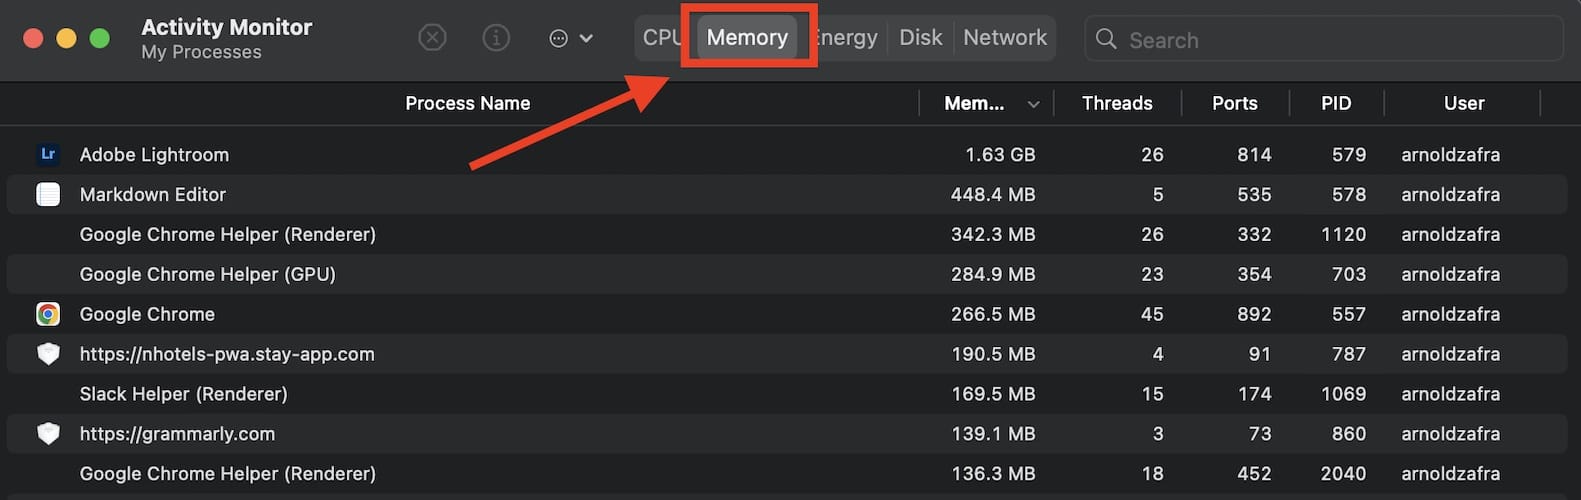 Activity Monitor Memory screenshot